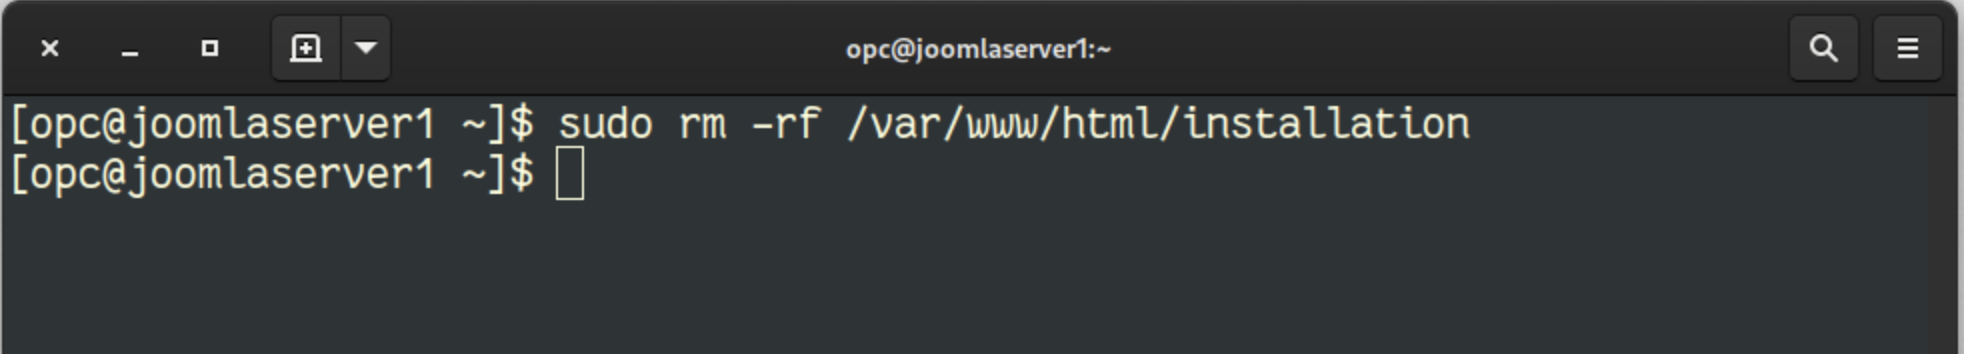 Terminal with command to delete Joomla's installation folder